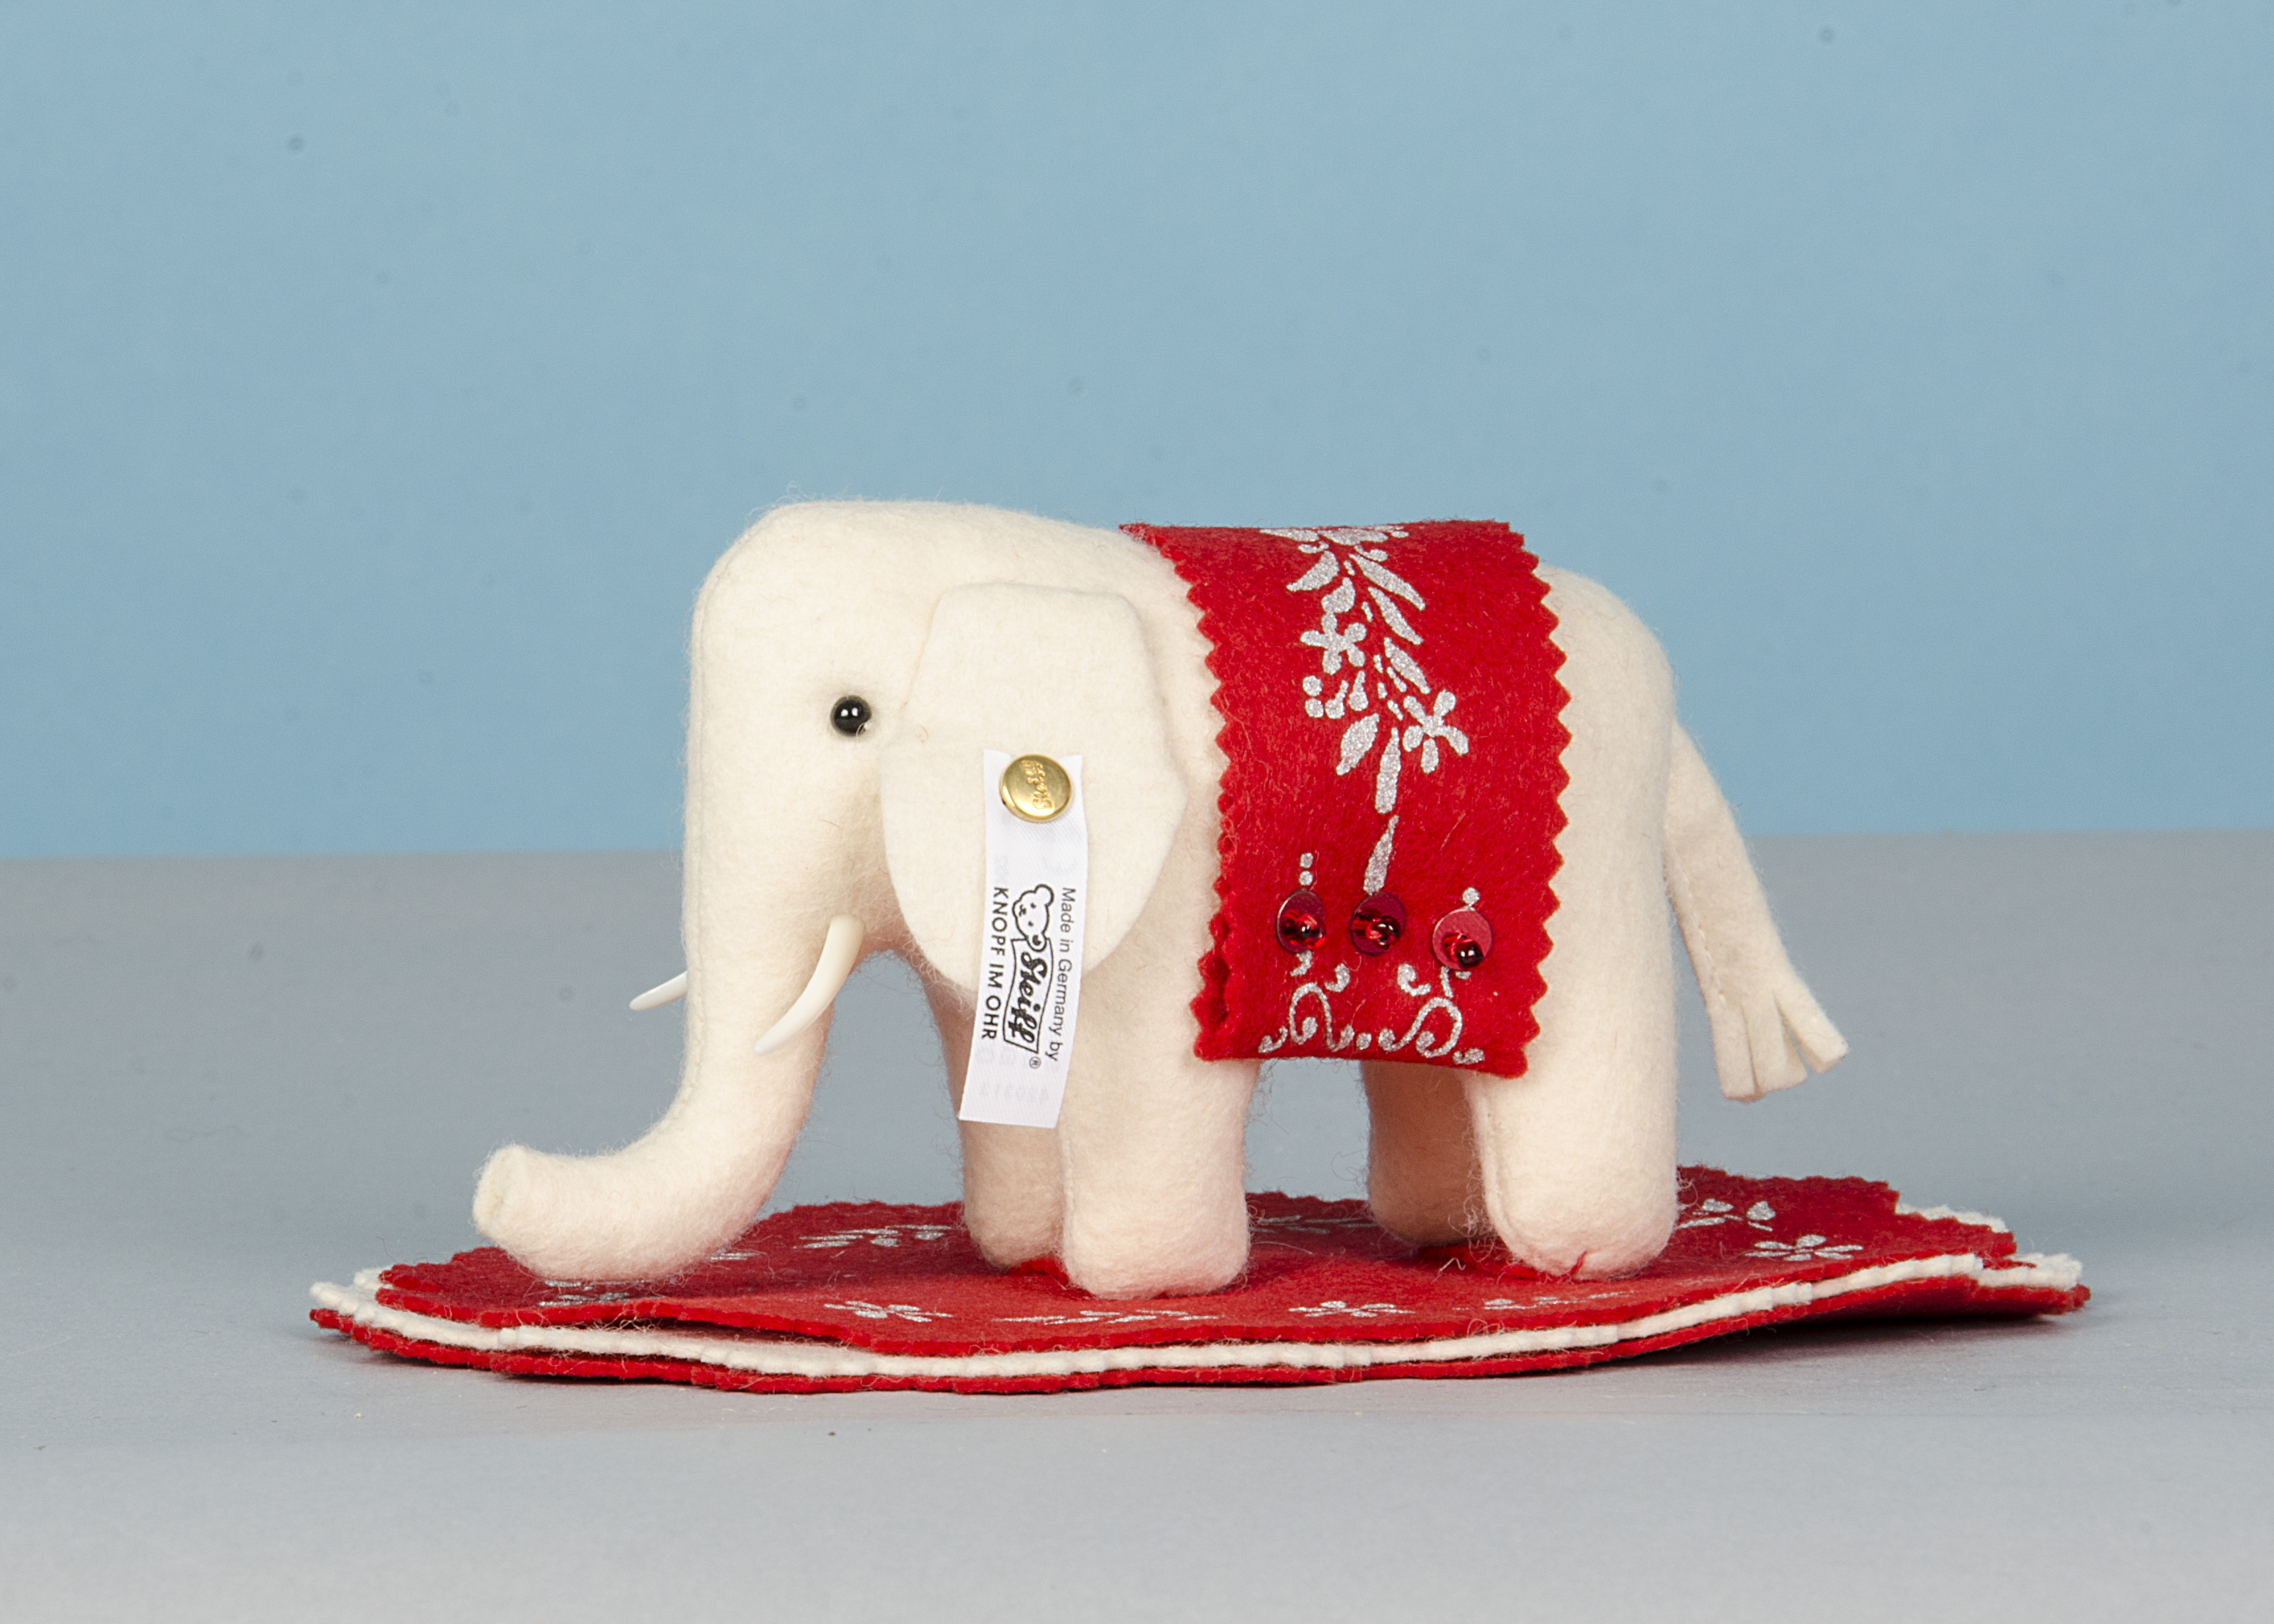 A Steiff Limited Edition Club Edition Little elephant 'Elefantle' pincushion, 1424 for the year